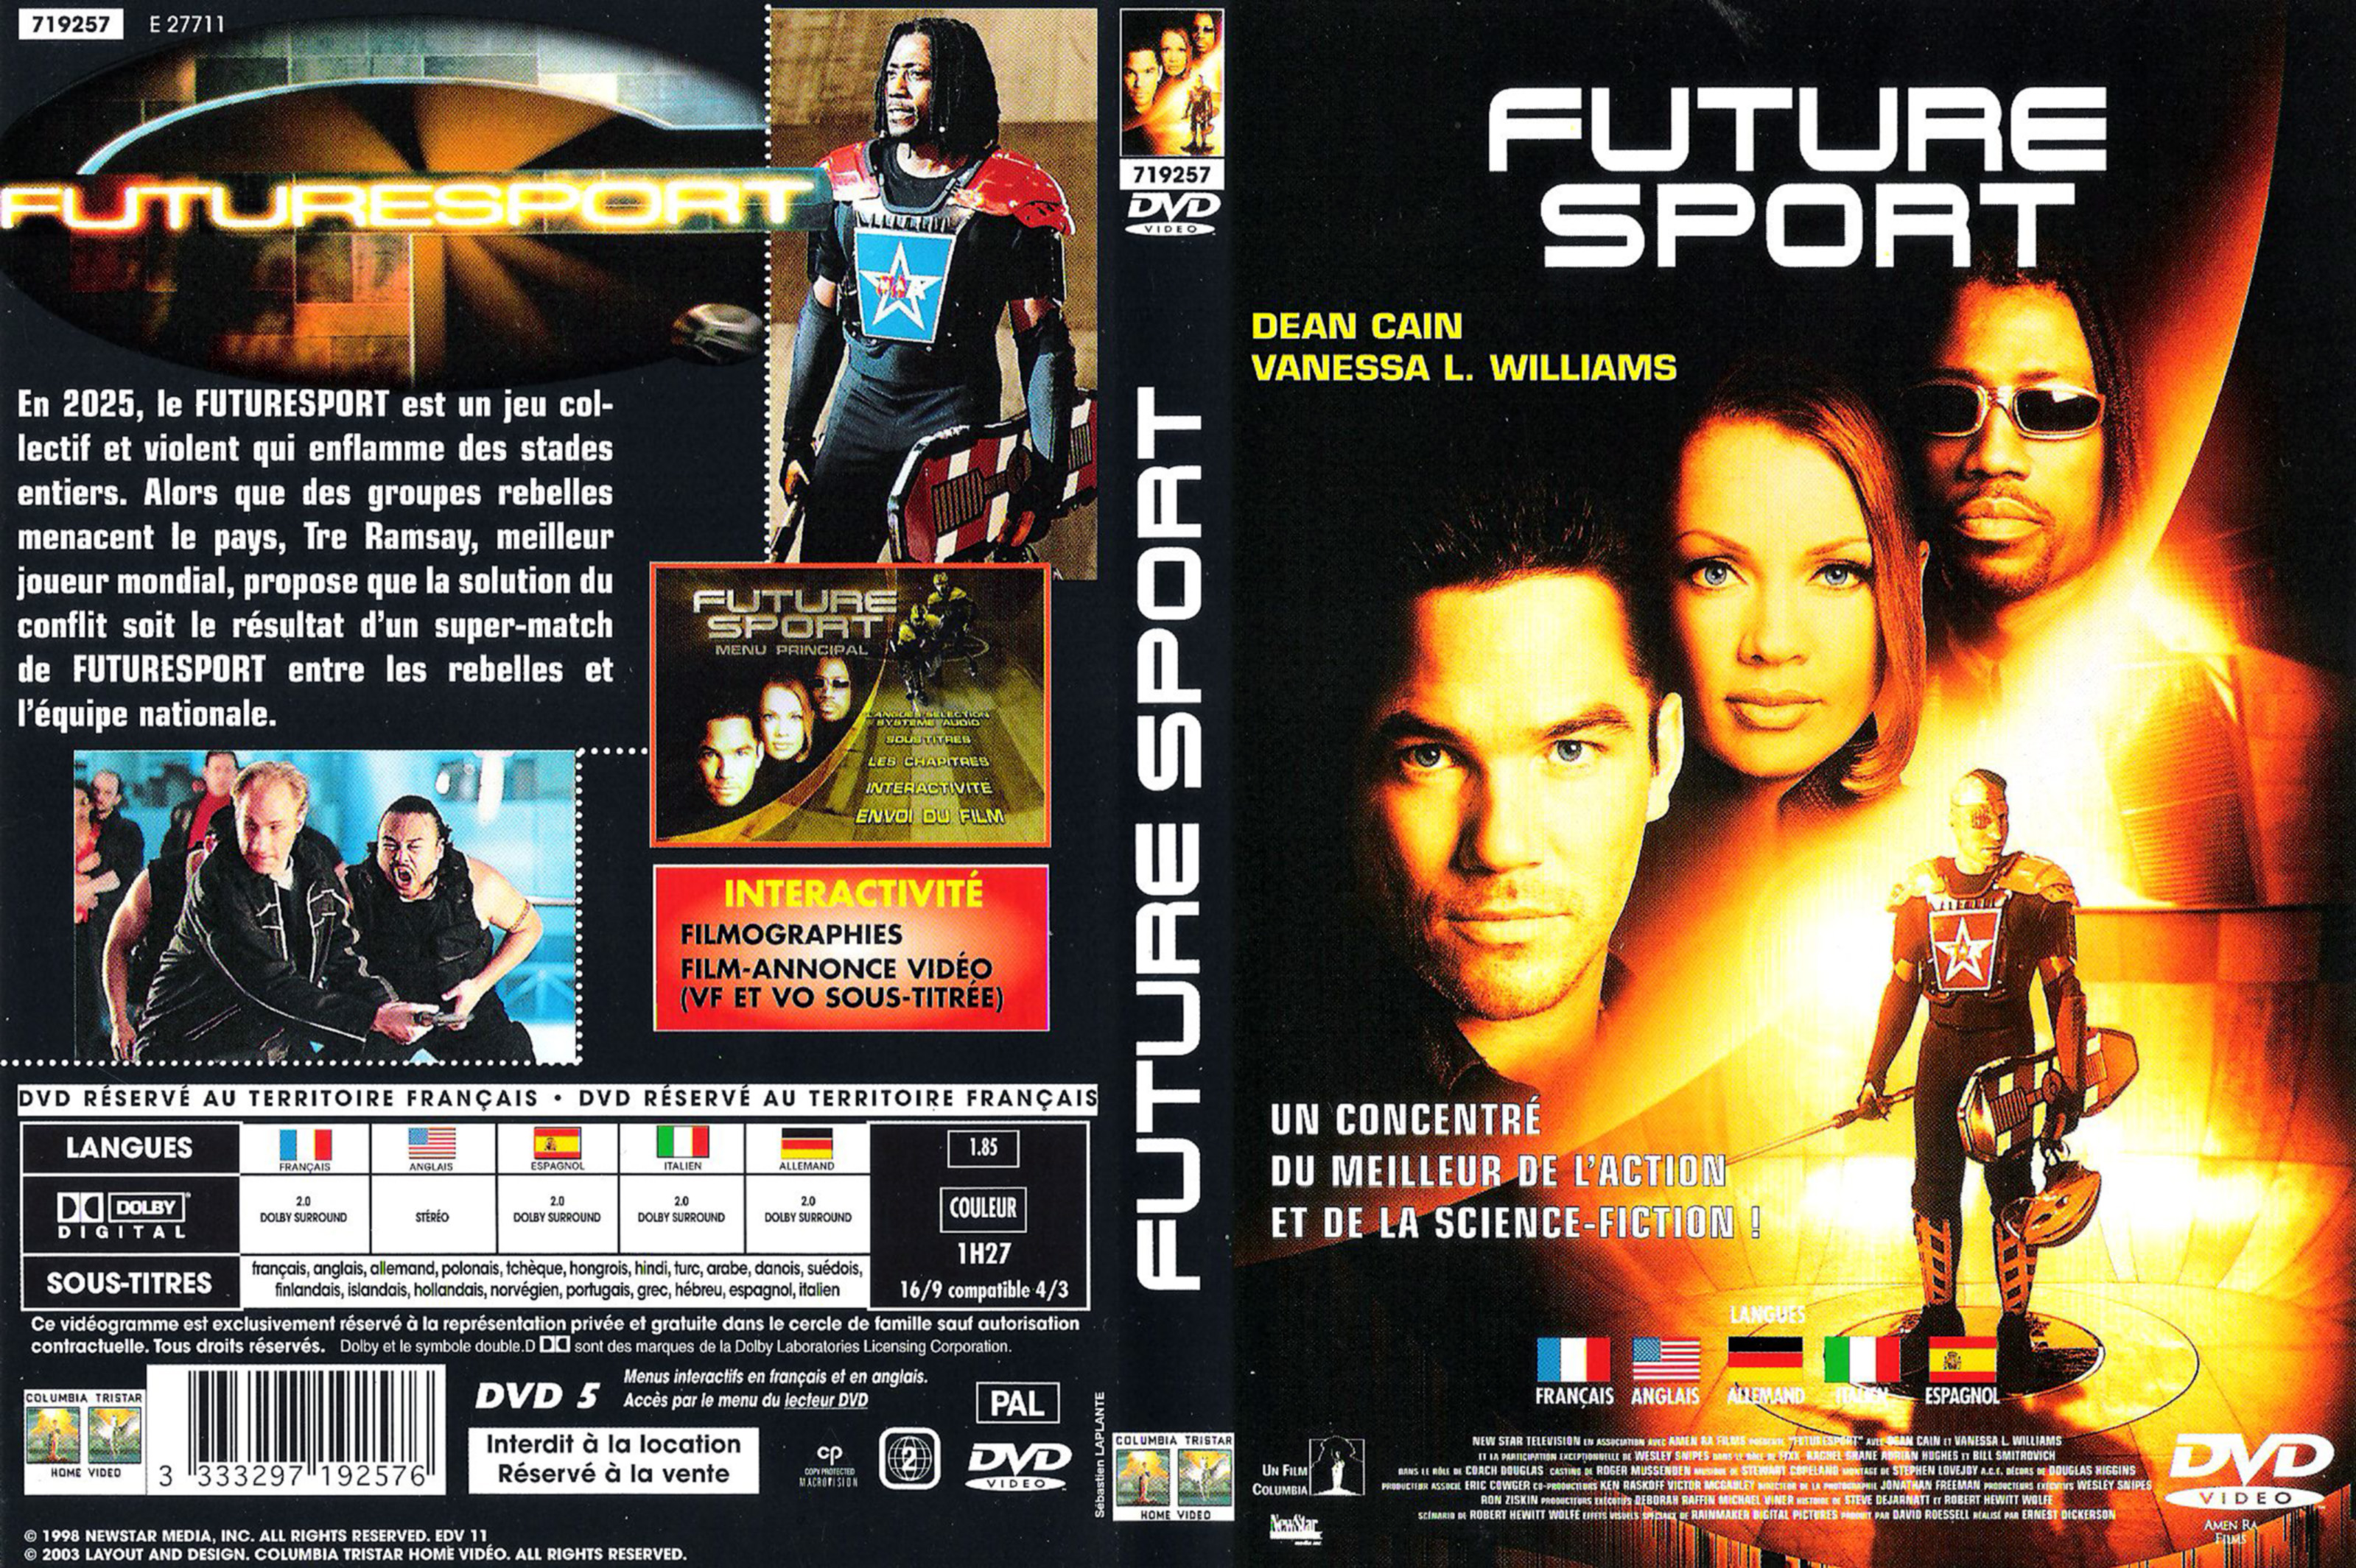 Jaquette DVD Future sport v2